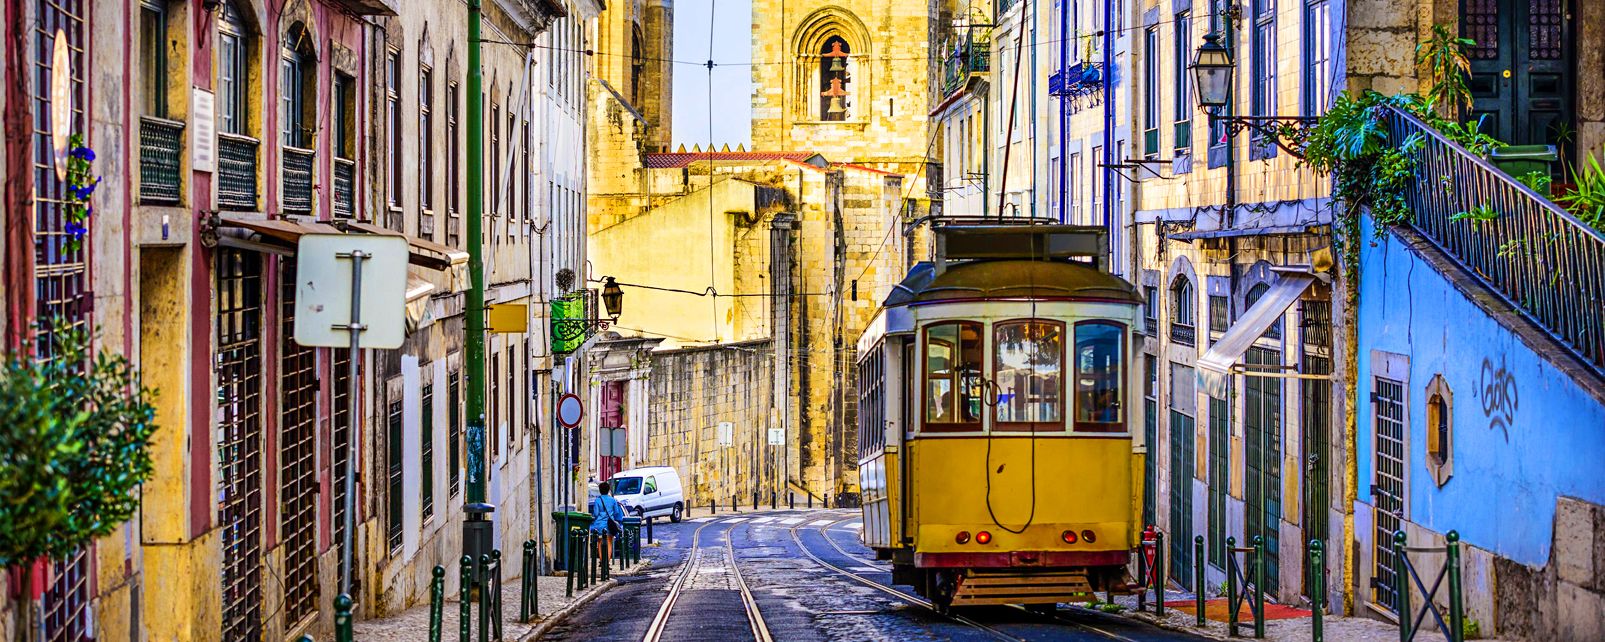 portugal-lisbonne